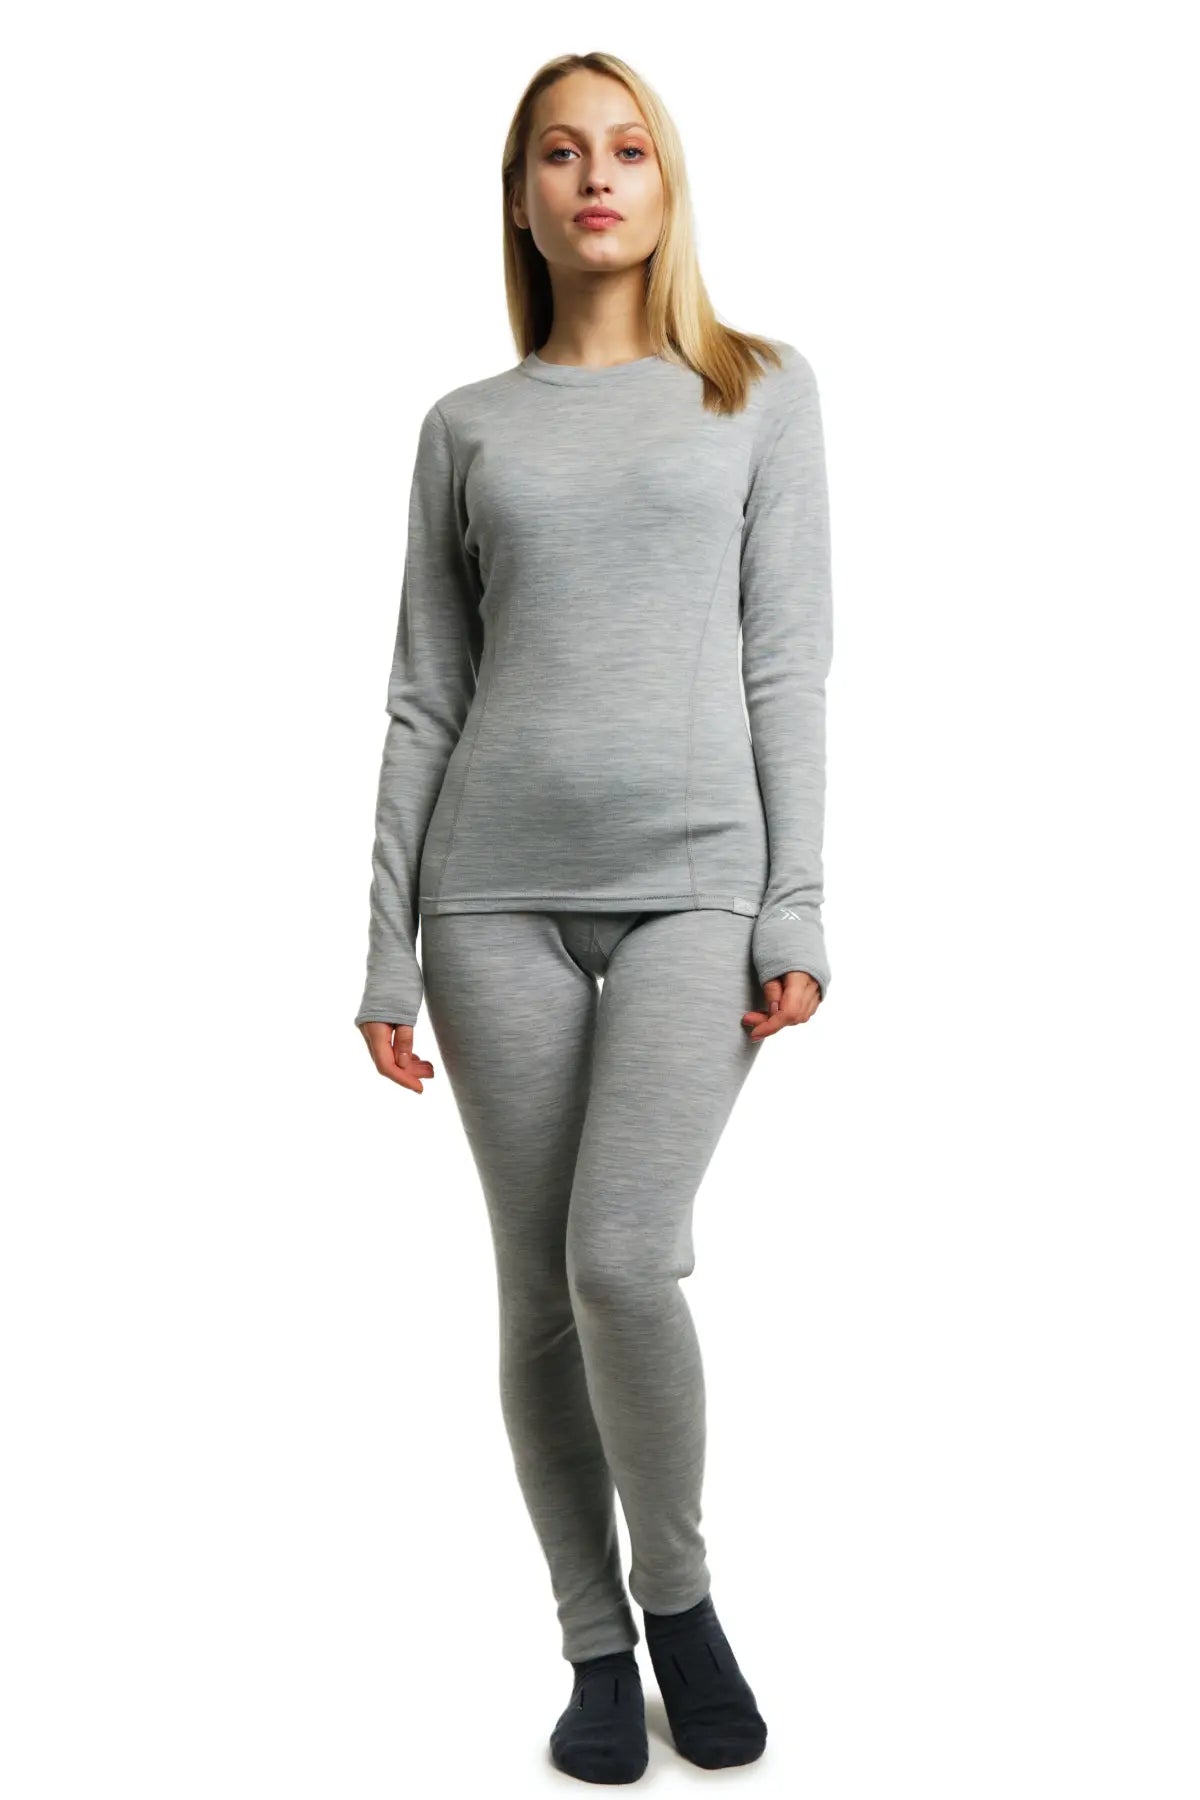 Women's Merino Wool Base Layer Set Charcoal Grey – Merino Tech